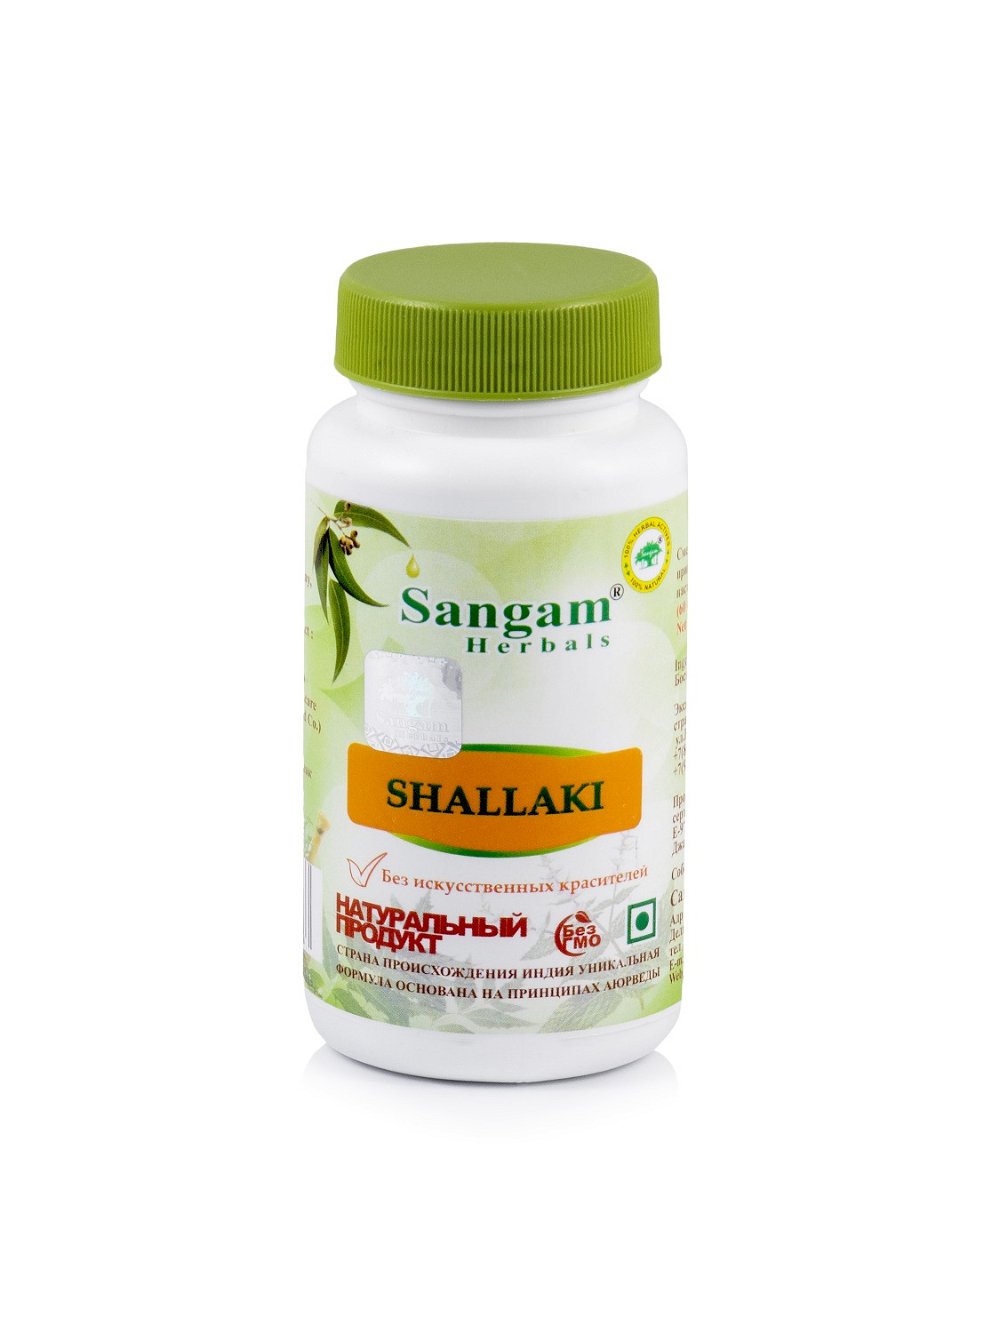 Шаллаки Sangam Herbals (60 таблеток), Шаллаки